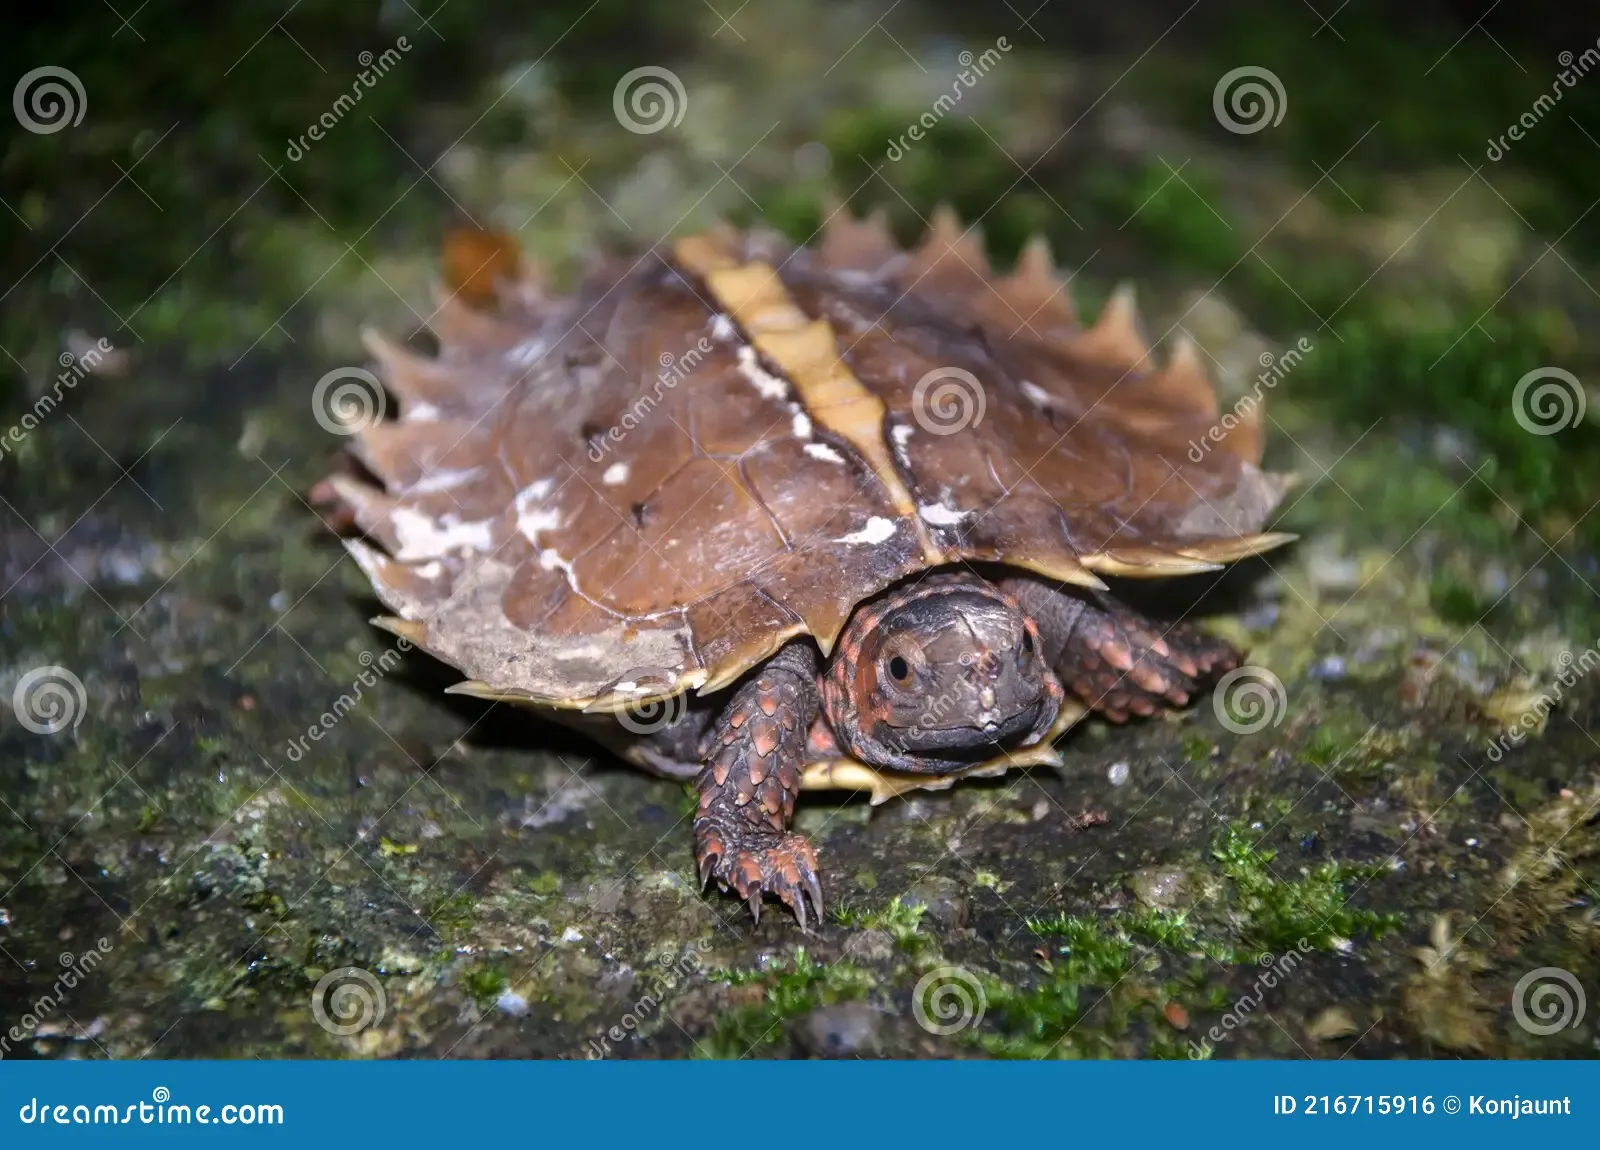 spiny-turtle-heosemys-spinosa-rock-green-moss-terrapin-cogwheel-wildness-forrest-rain-thailand-216715916.jpg